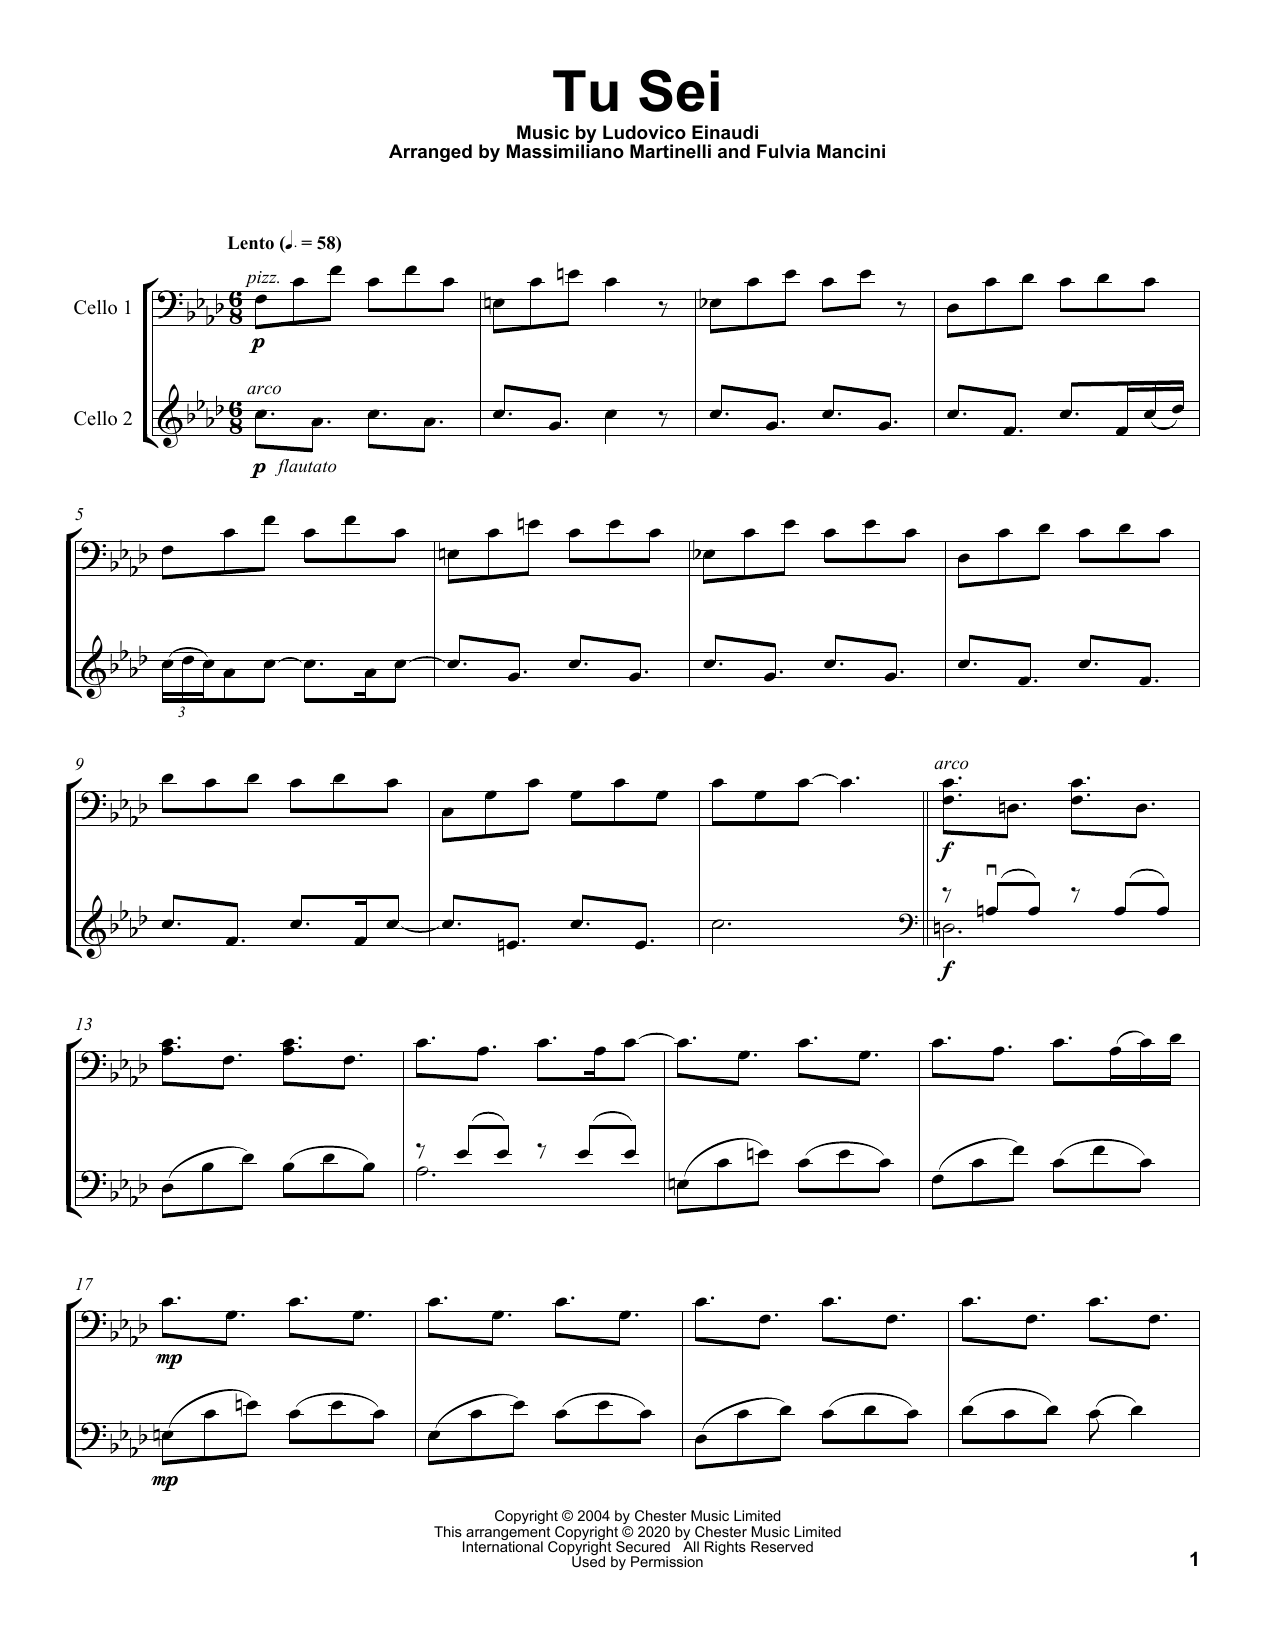 Mr. & Mrs. Cello Tu Sei Sheet Music Notes & Chords for Cello Duet - Download or Print PDF